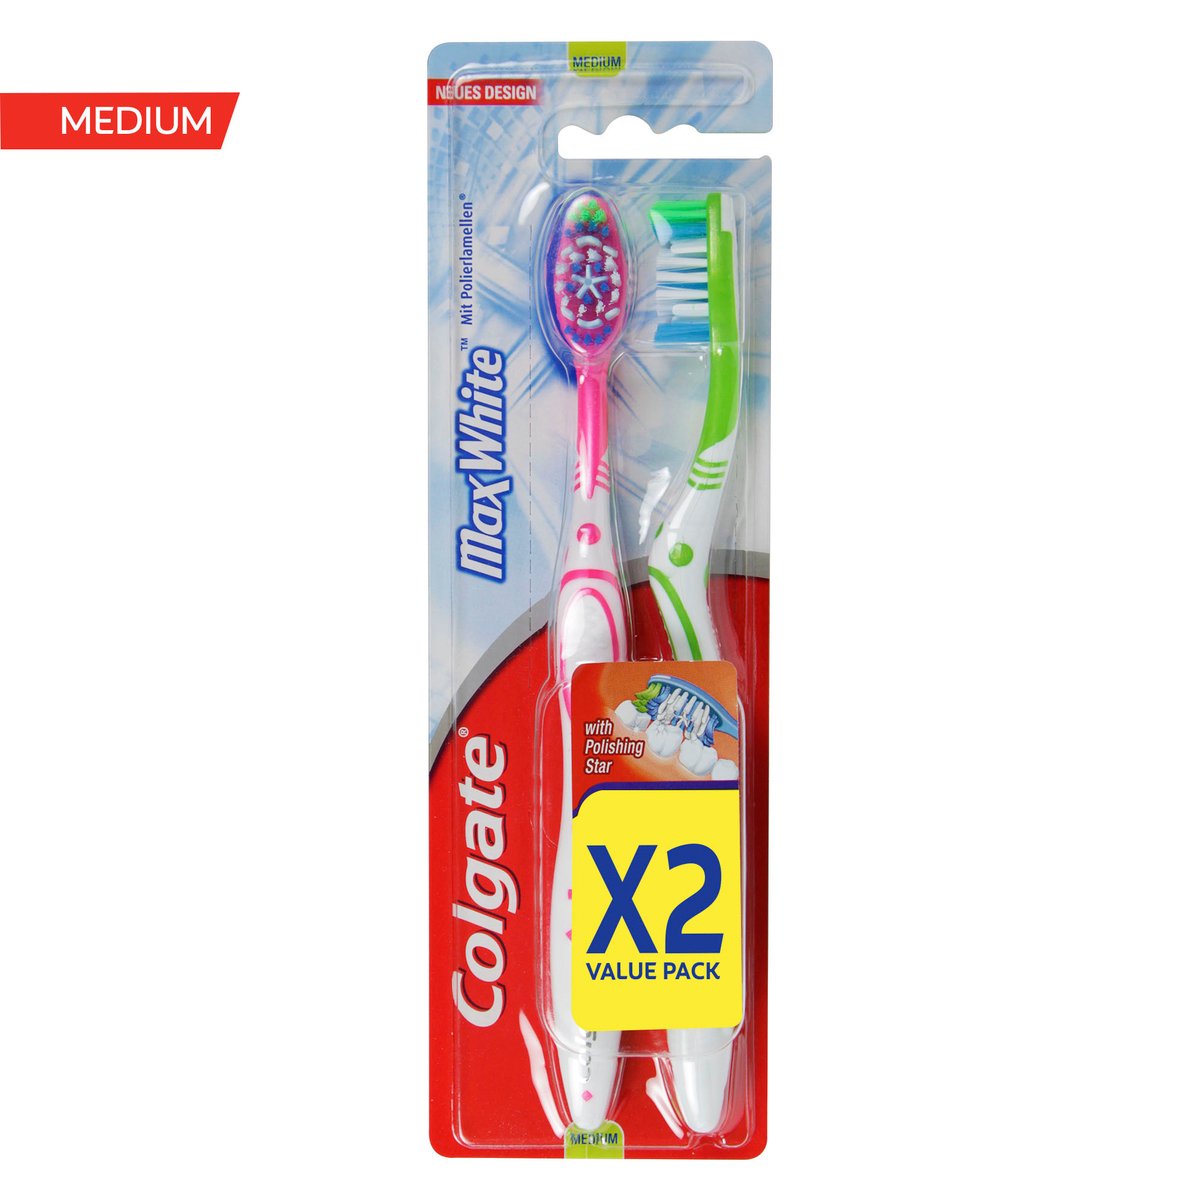 Colgate Max White Medium Toothbrush Assorted Color Value Pack 2 pcs